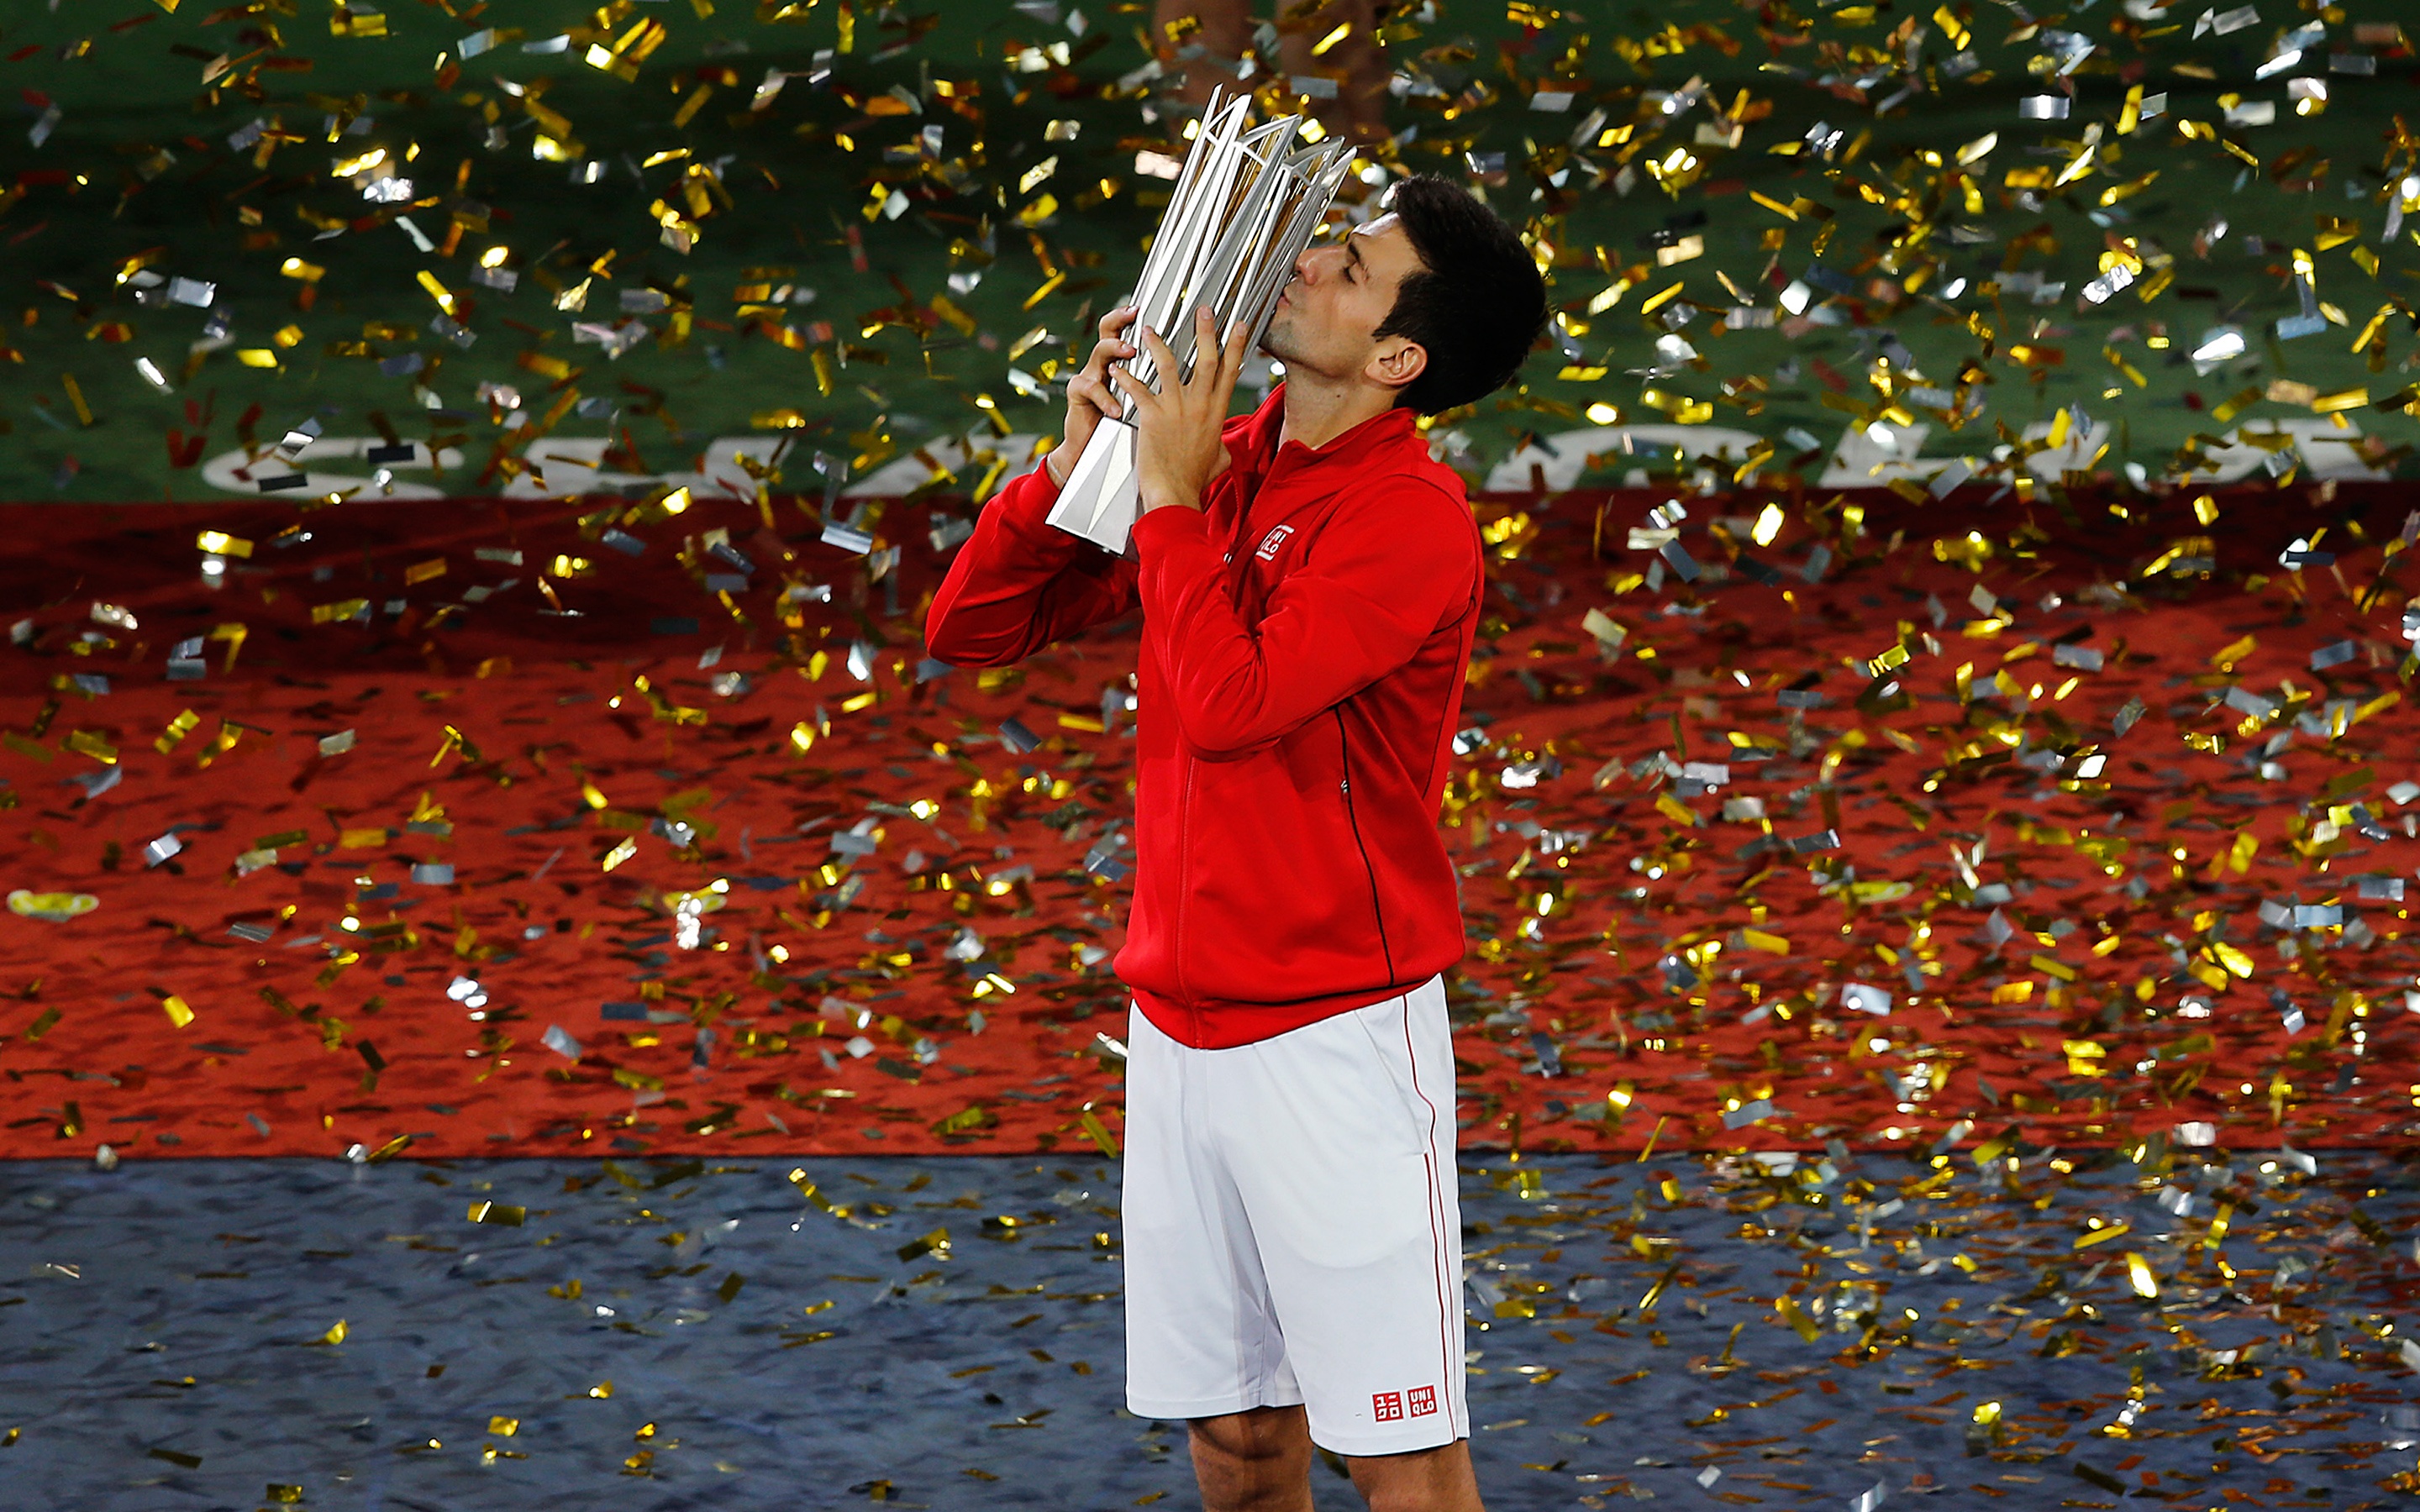 The Winner Novak Djokovic